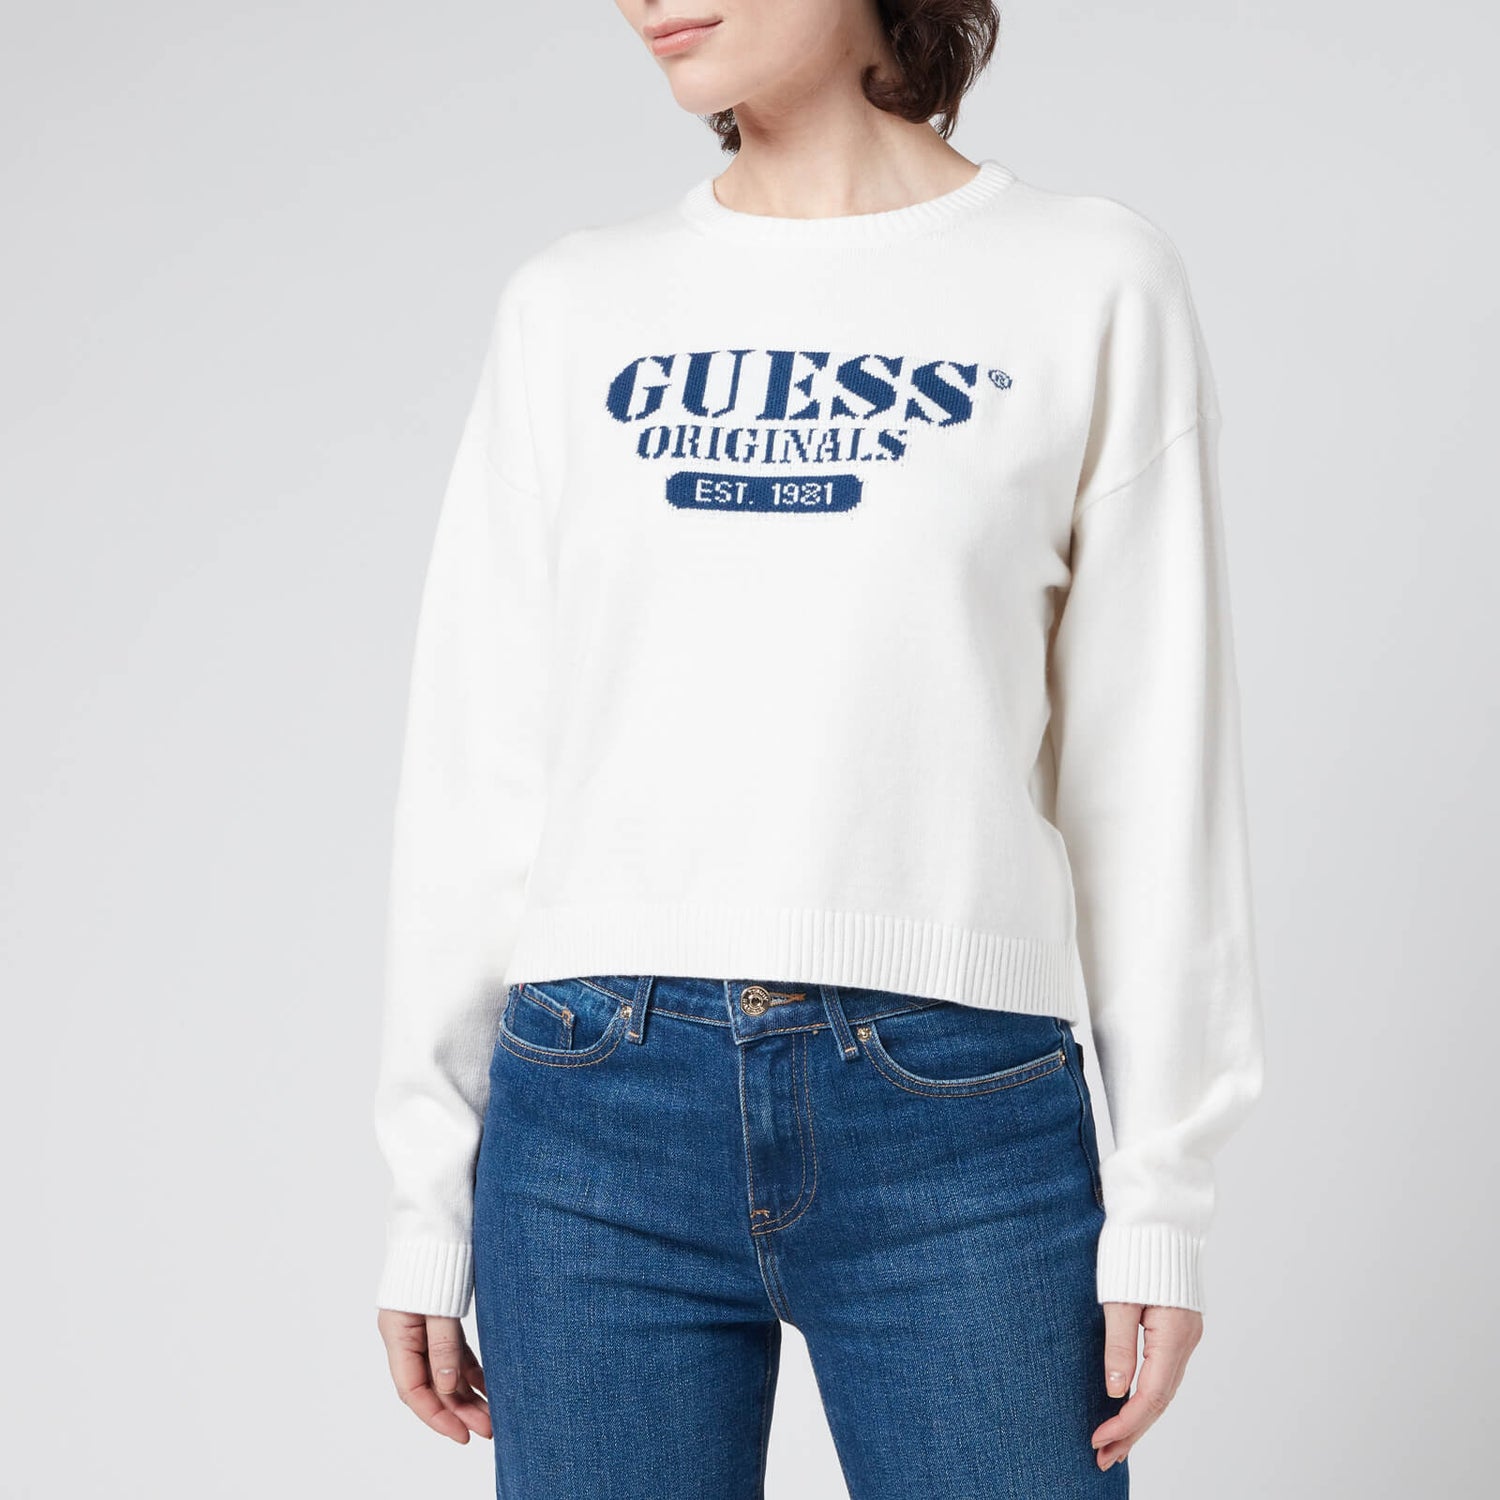 Guess Originals Women's Go Gia Crewneck Sweatshirt - Dove White - XS